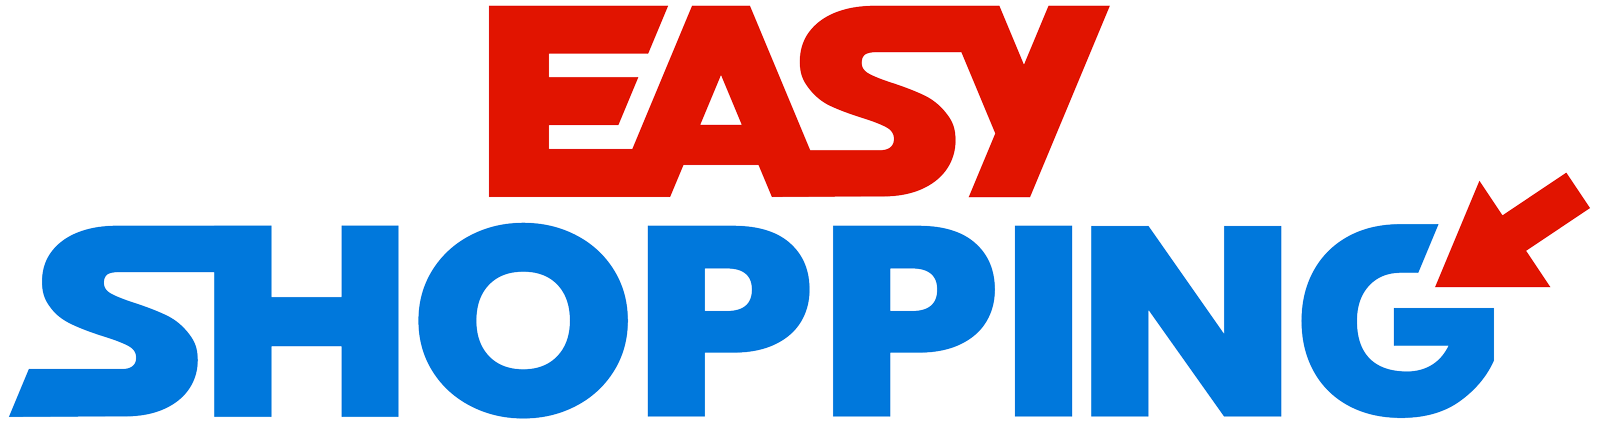 easy shopping logo